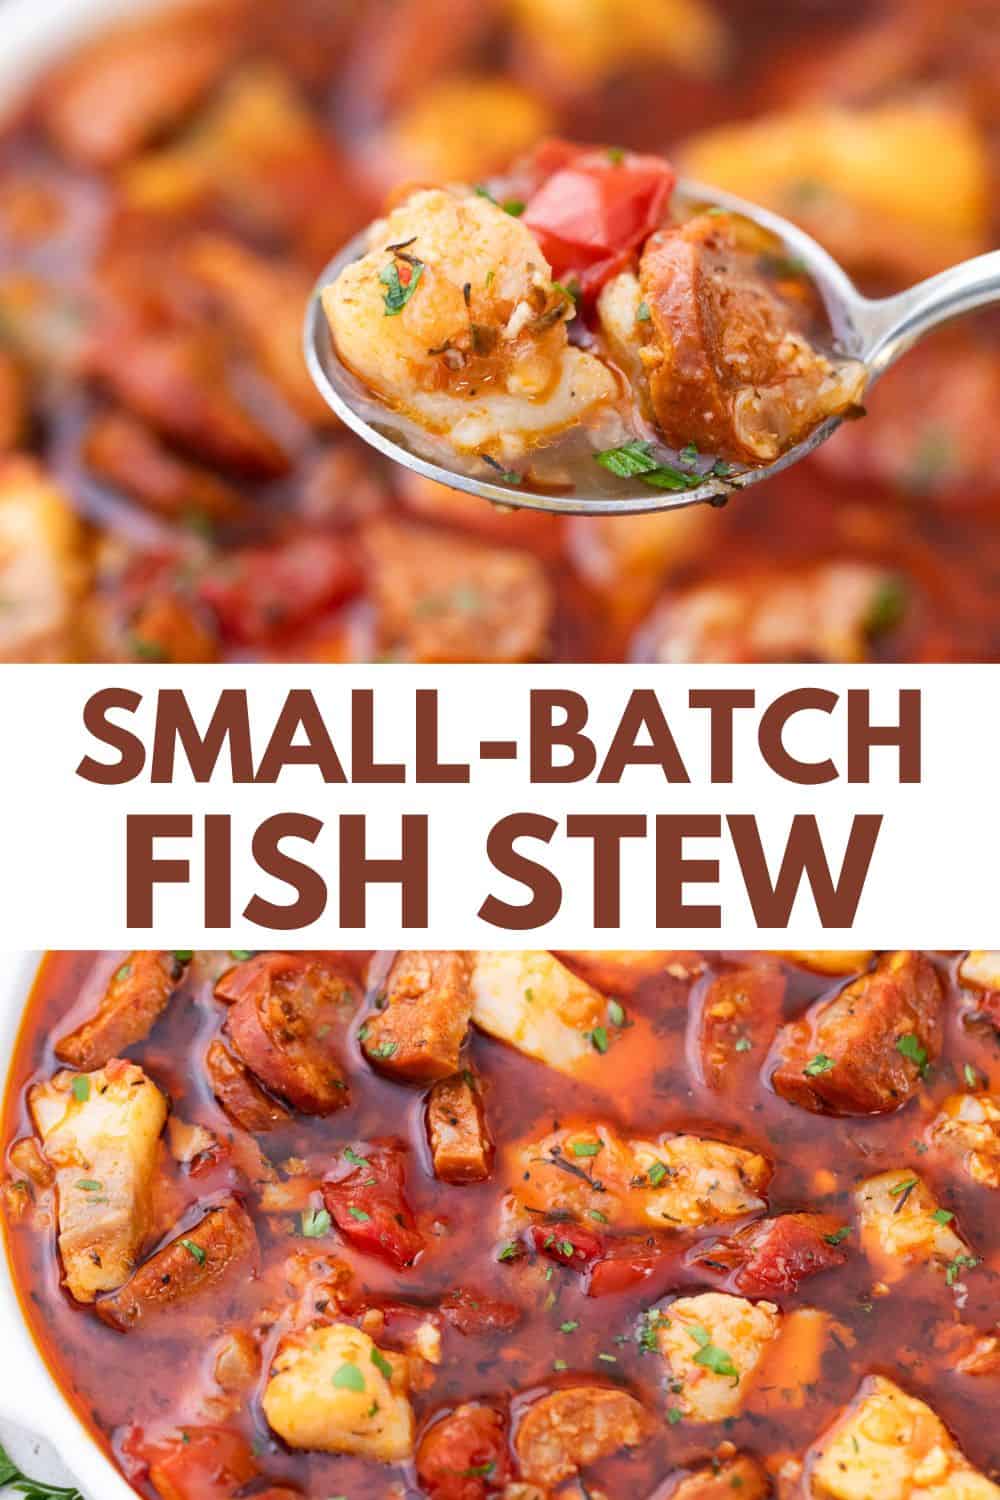 Small batch fish stew.